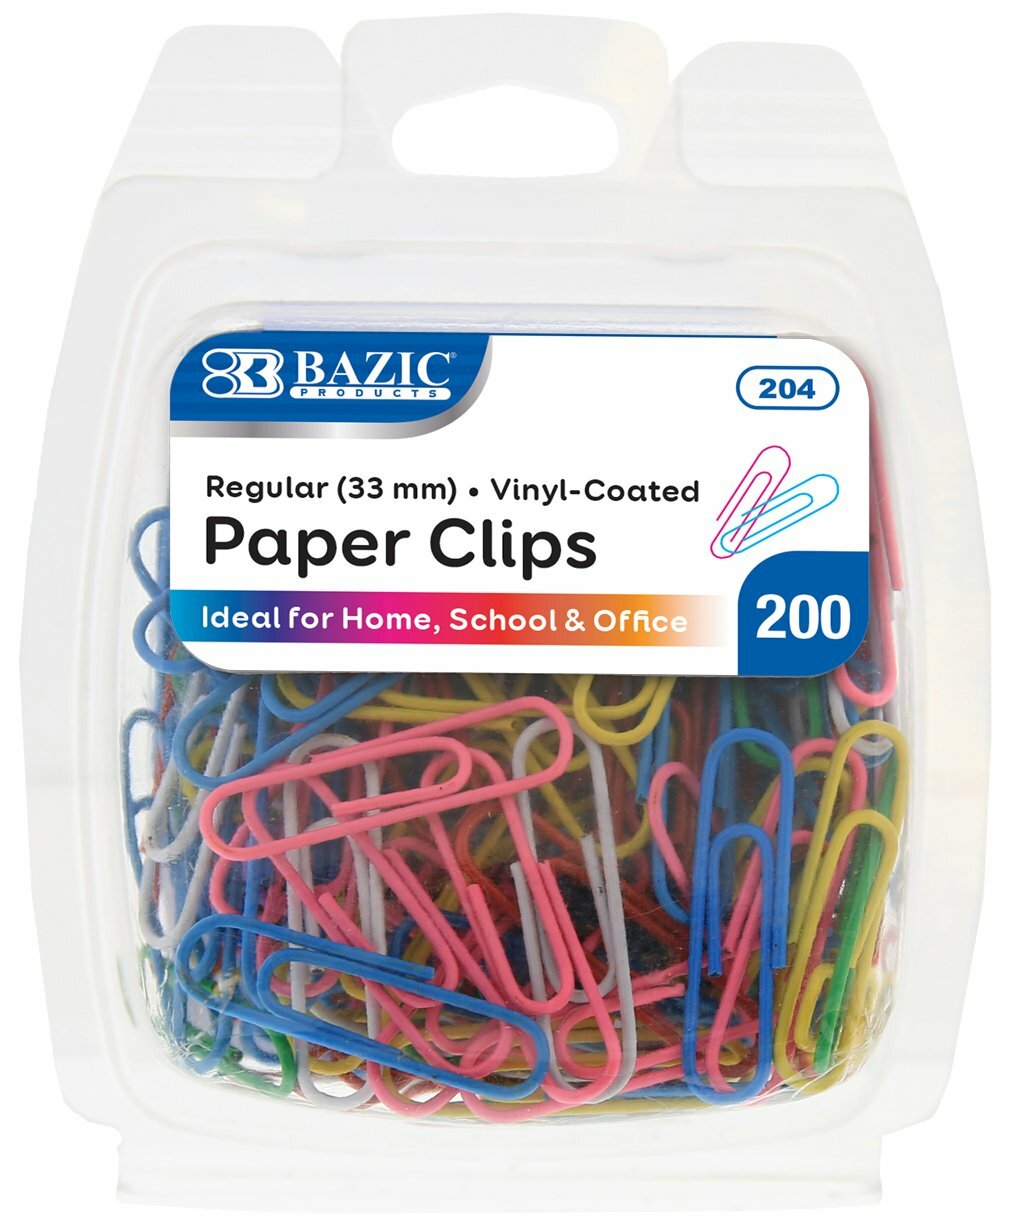 Paper Clips Bazic #1/AC 200 (IN-6) (204)